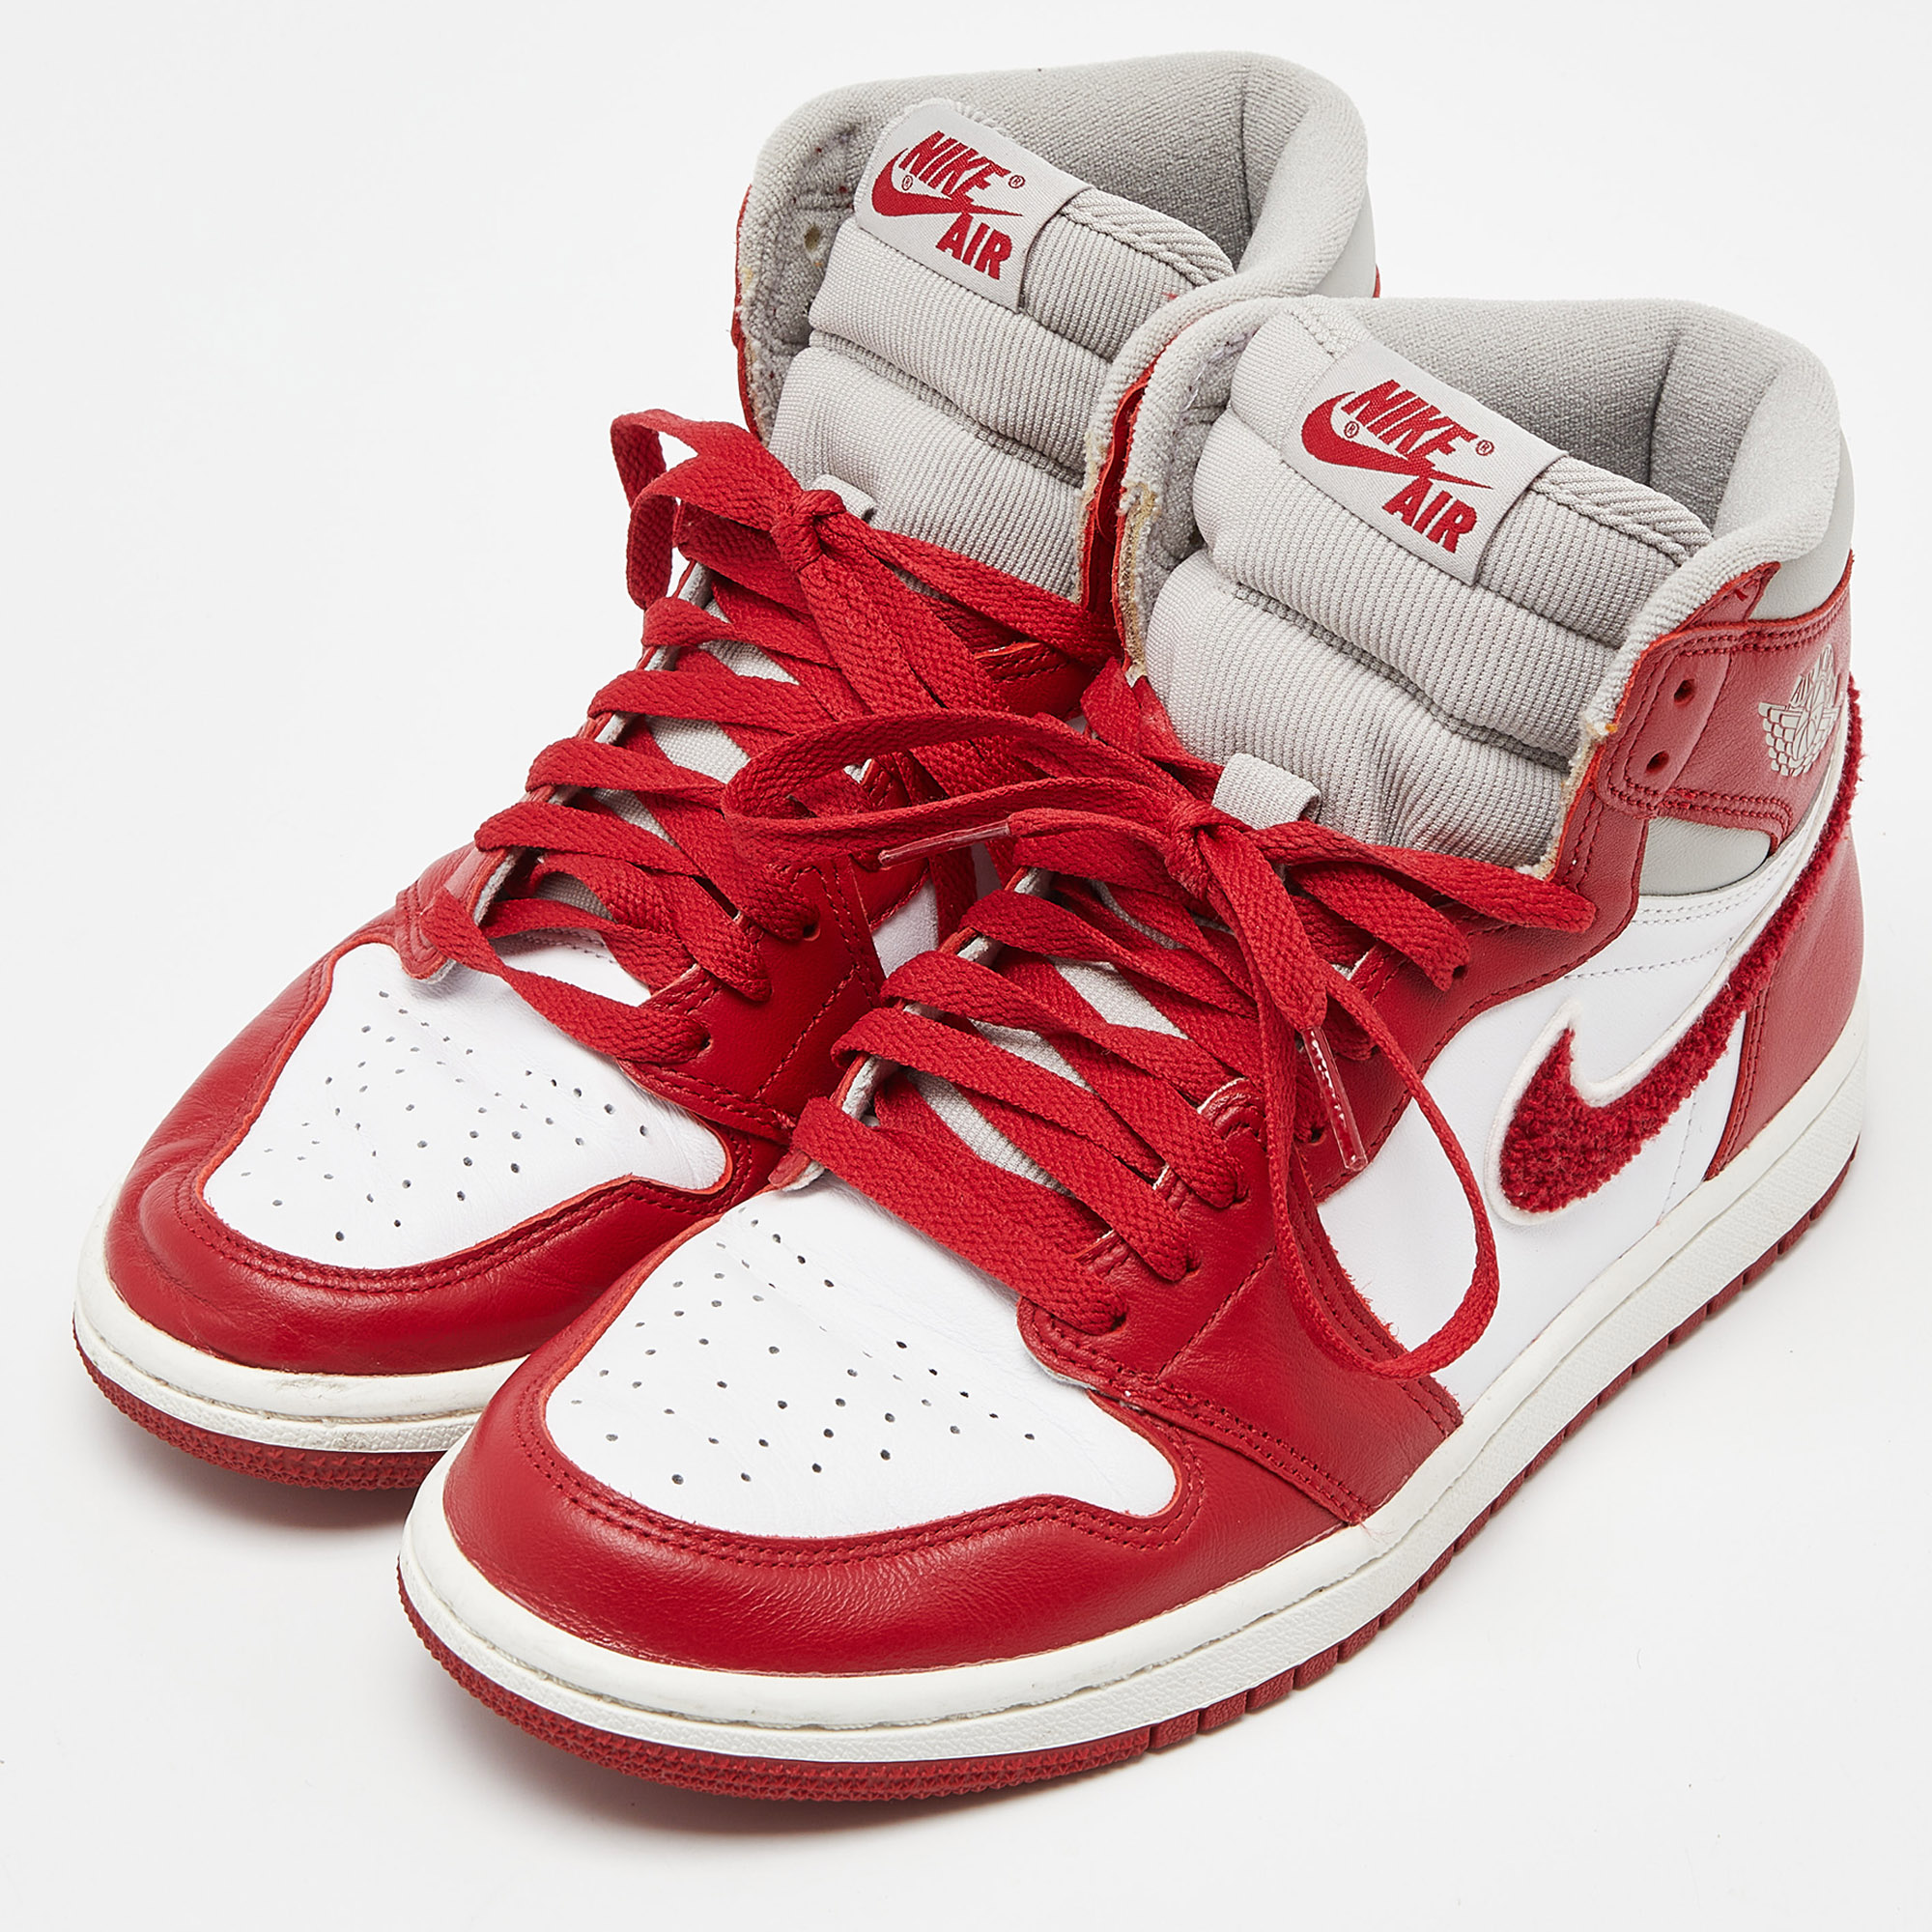 

Nike Air Jordan Red/White Leather Jordan 1 1 High OG "Newstalgia" Sneakers Size